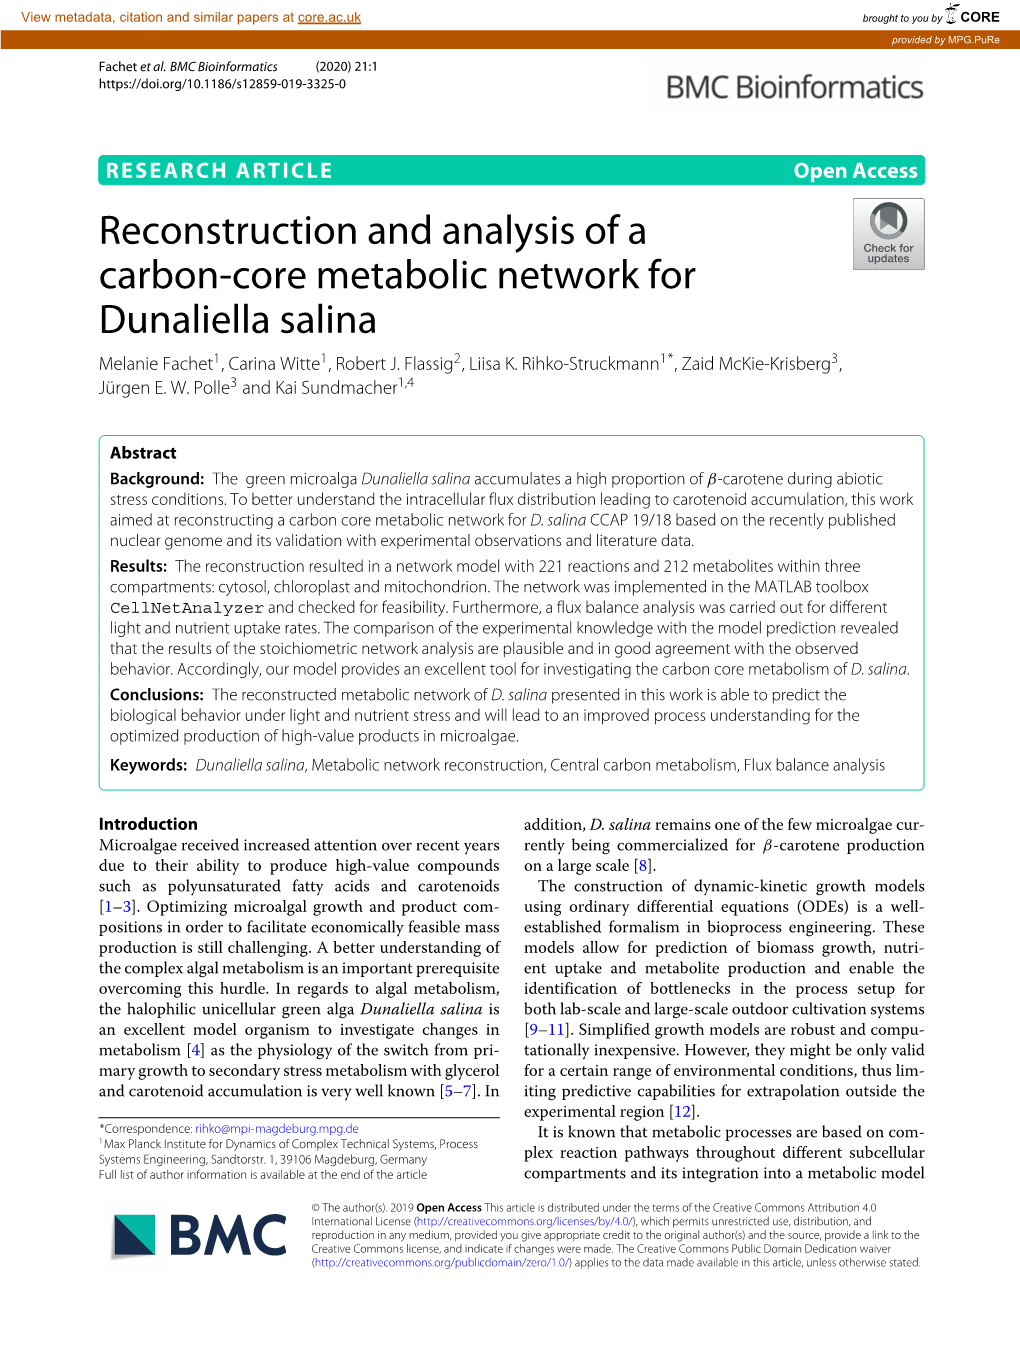 Reconstruction and Analysis of a Carbon-Core Metabolic Network for Dunaliella Salina Melanie Fachet1, Carina Witte1, Robert J